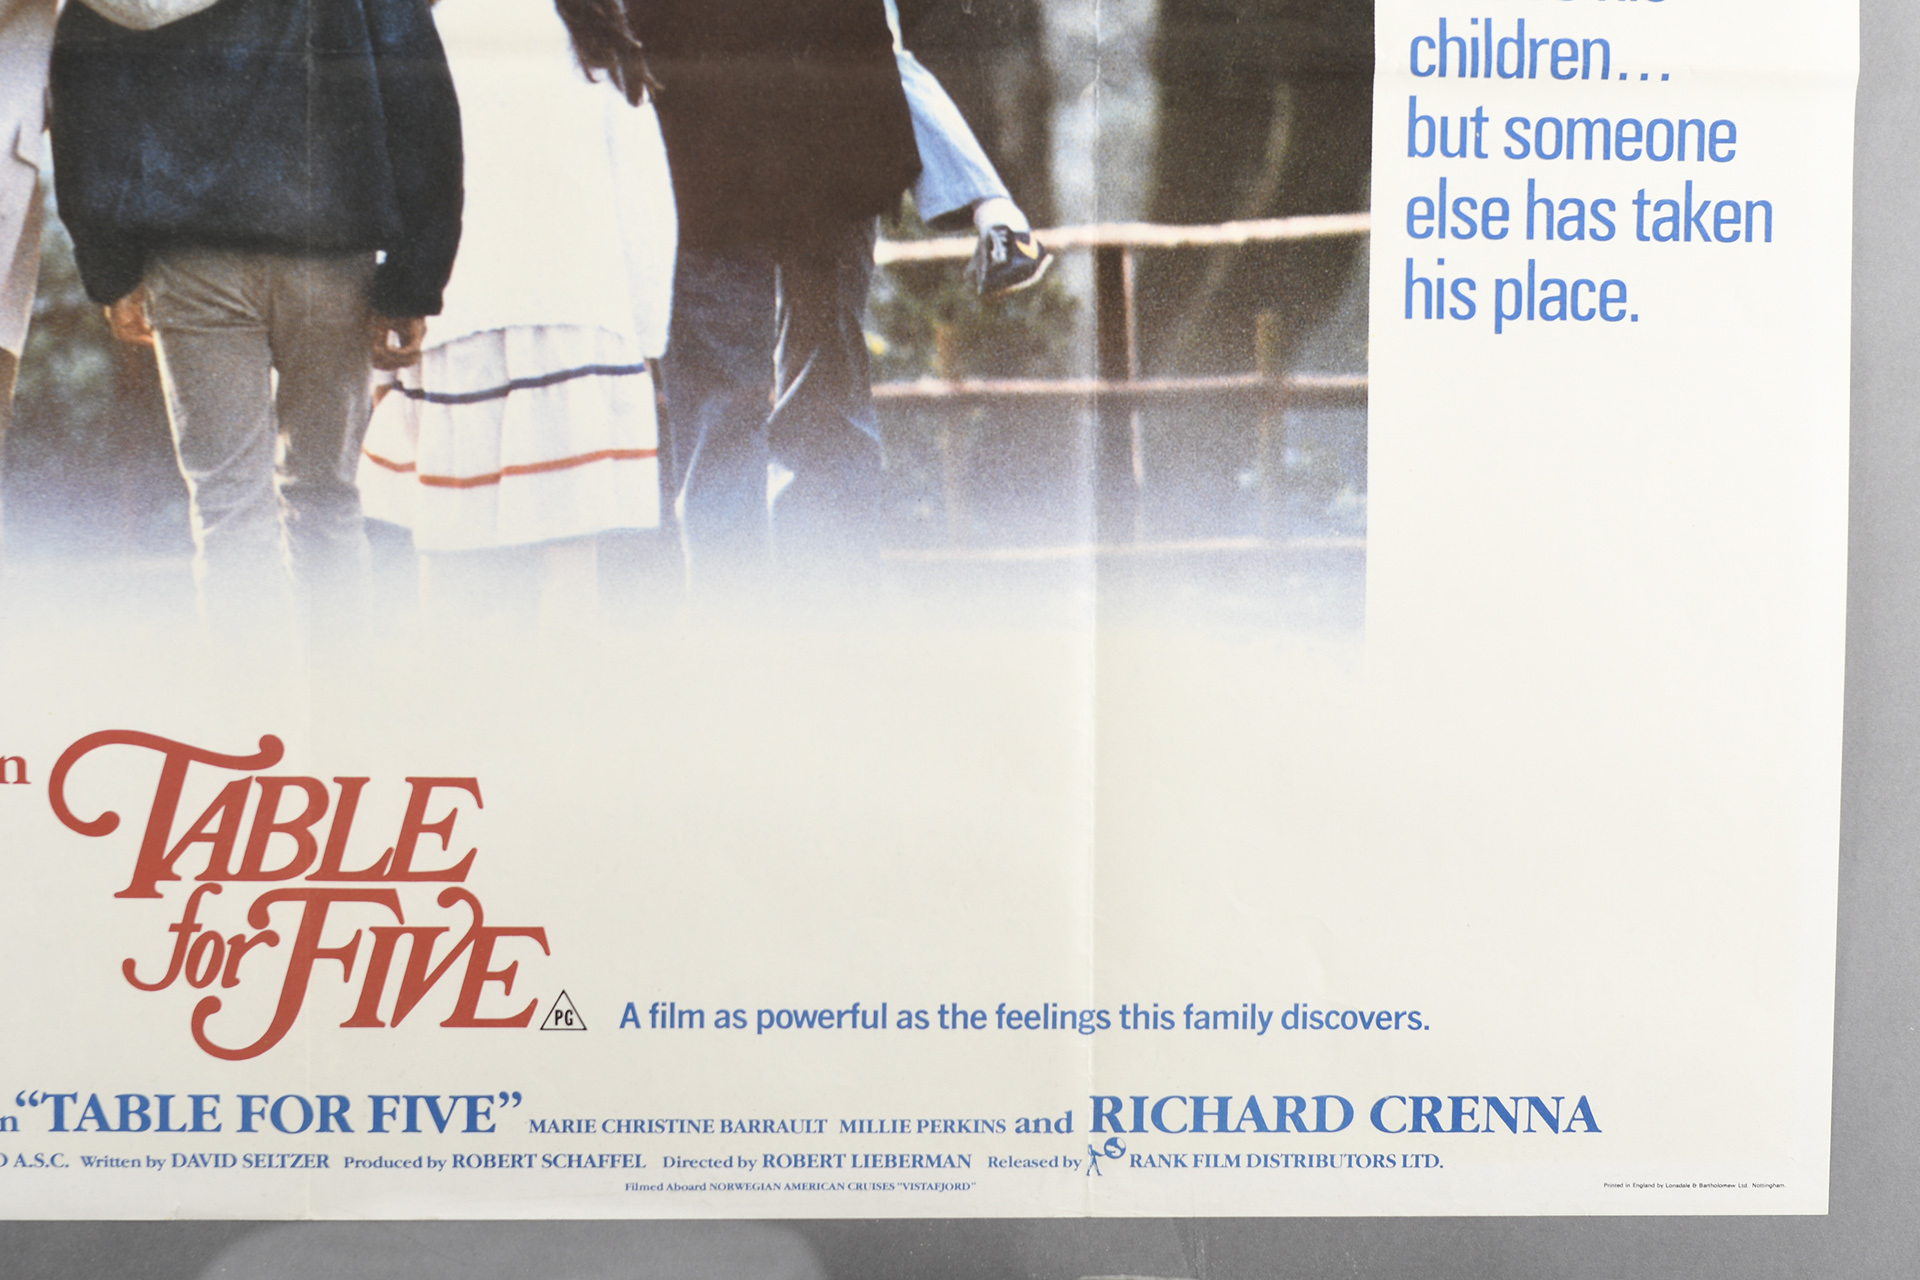 Original "Table for Five" Cinema Poster